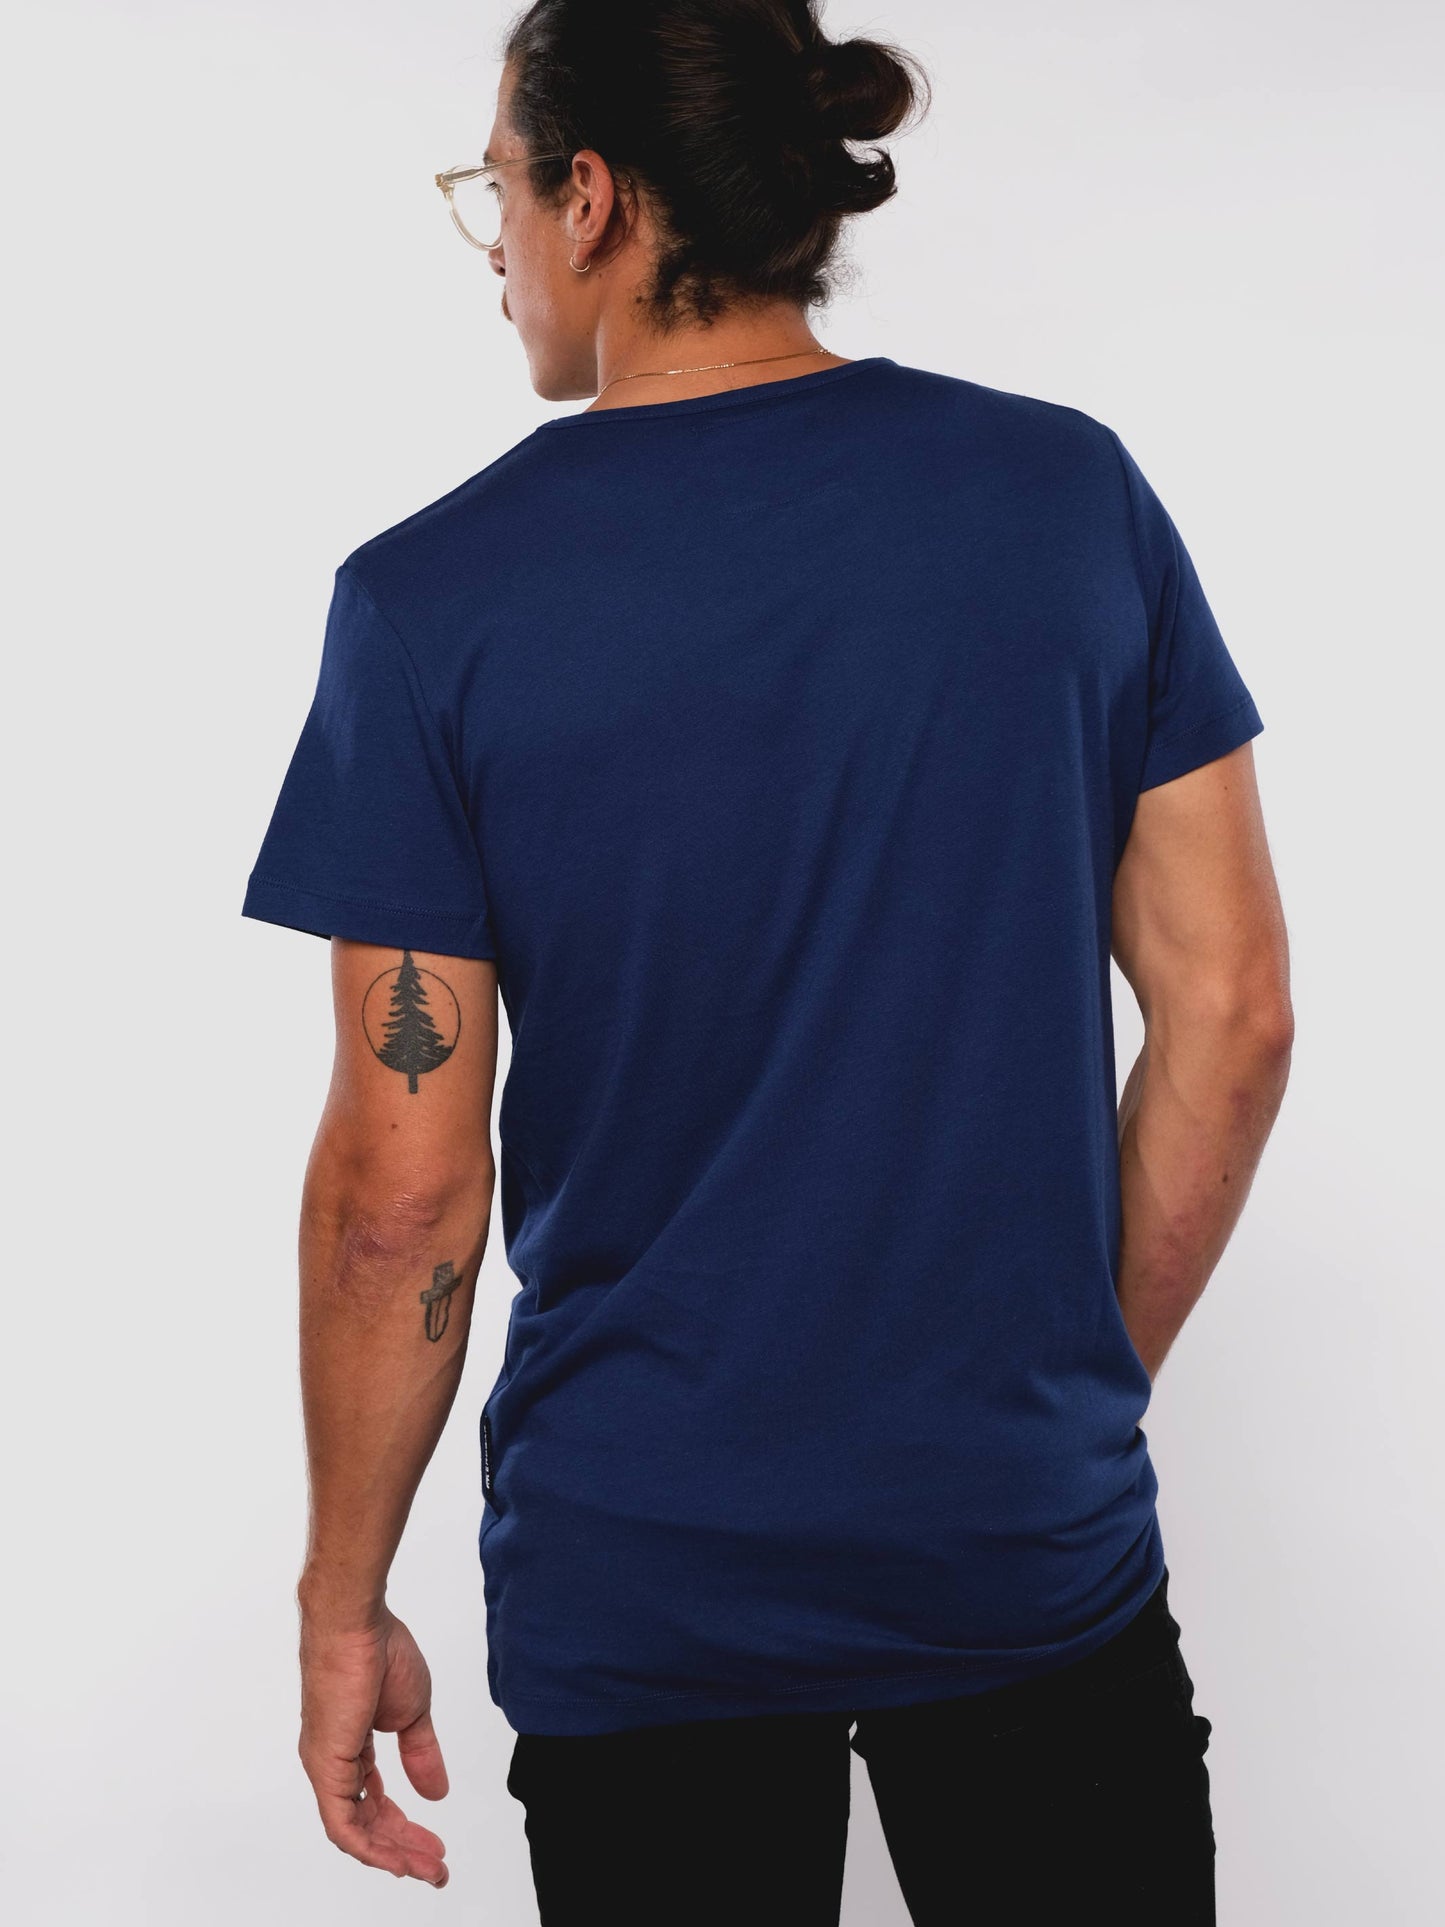 Herren T-Shirt ERDBÄR WELT (dunkelblau)